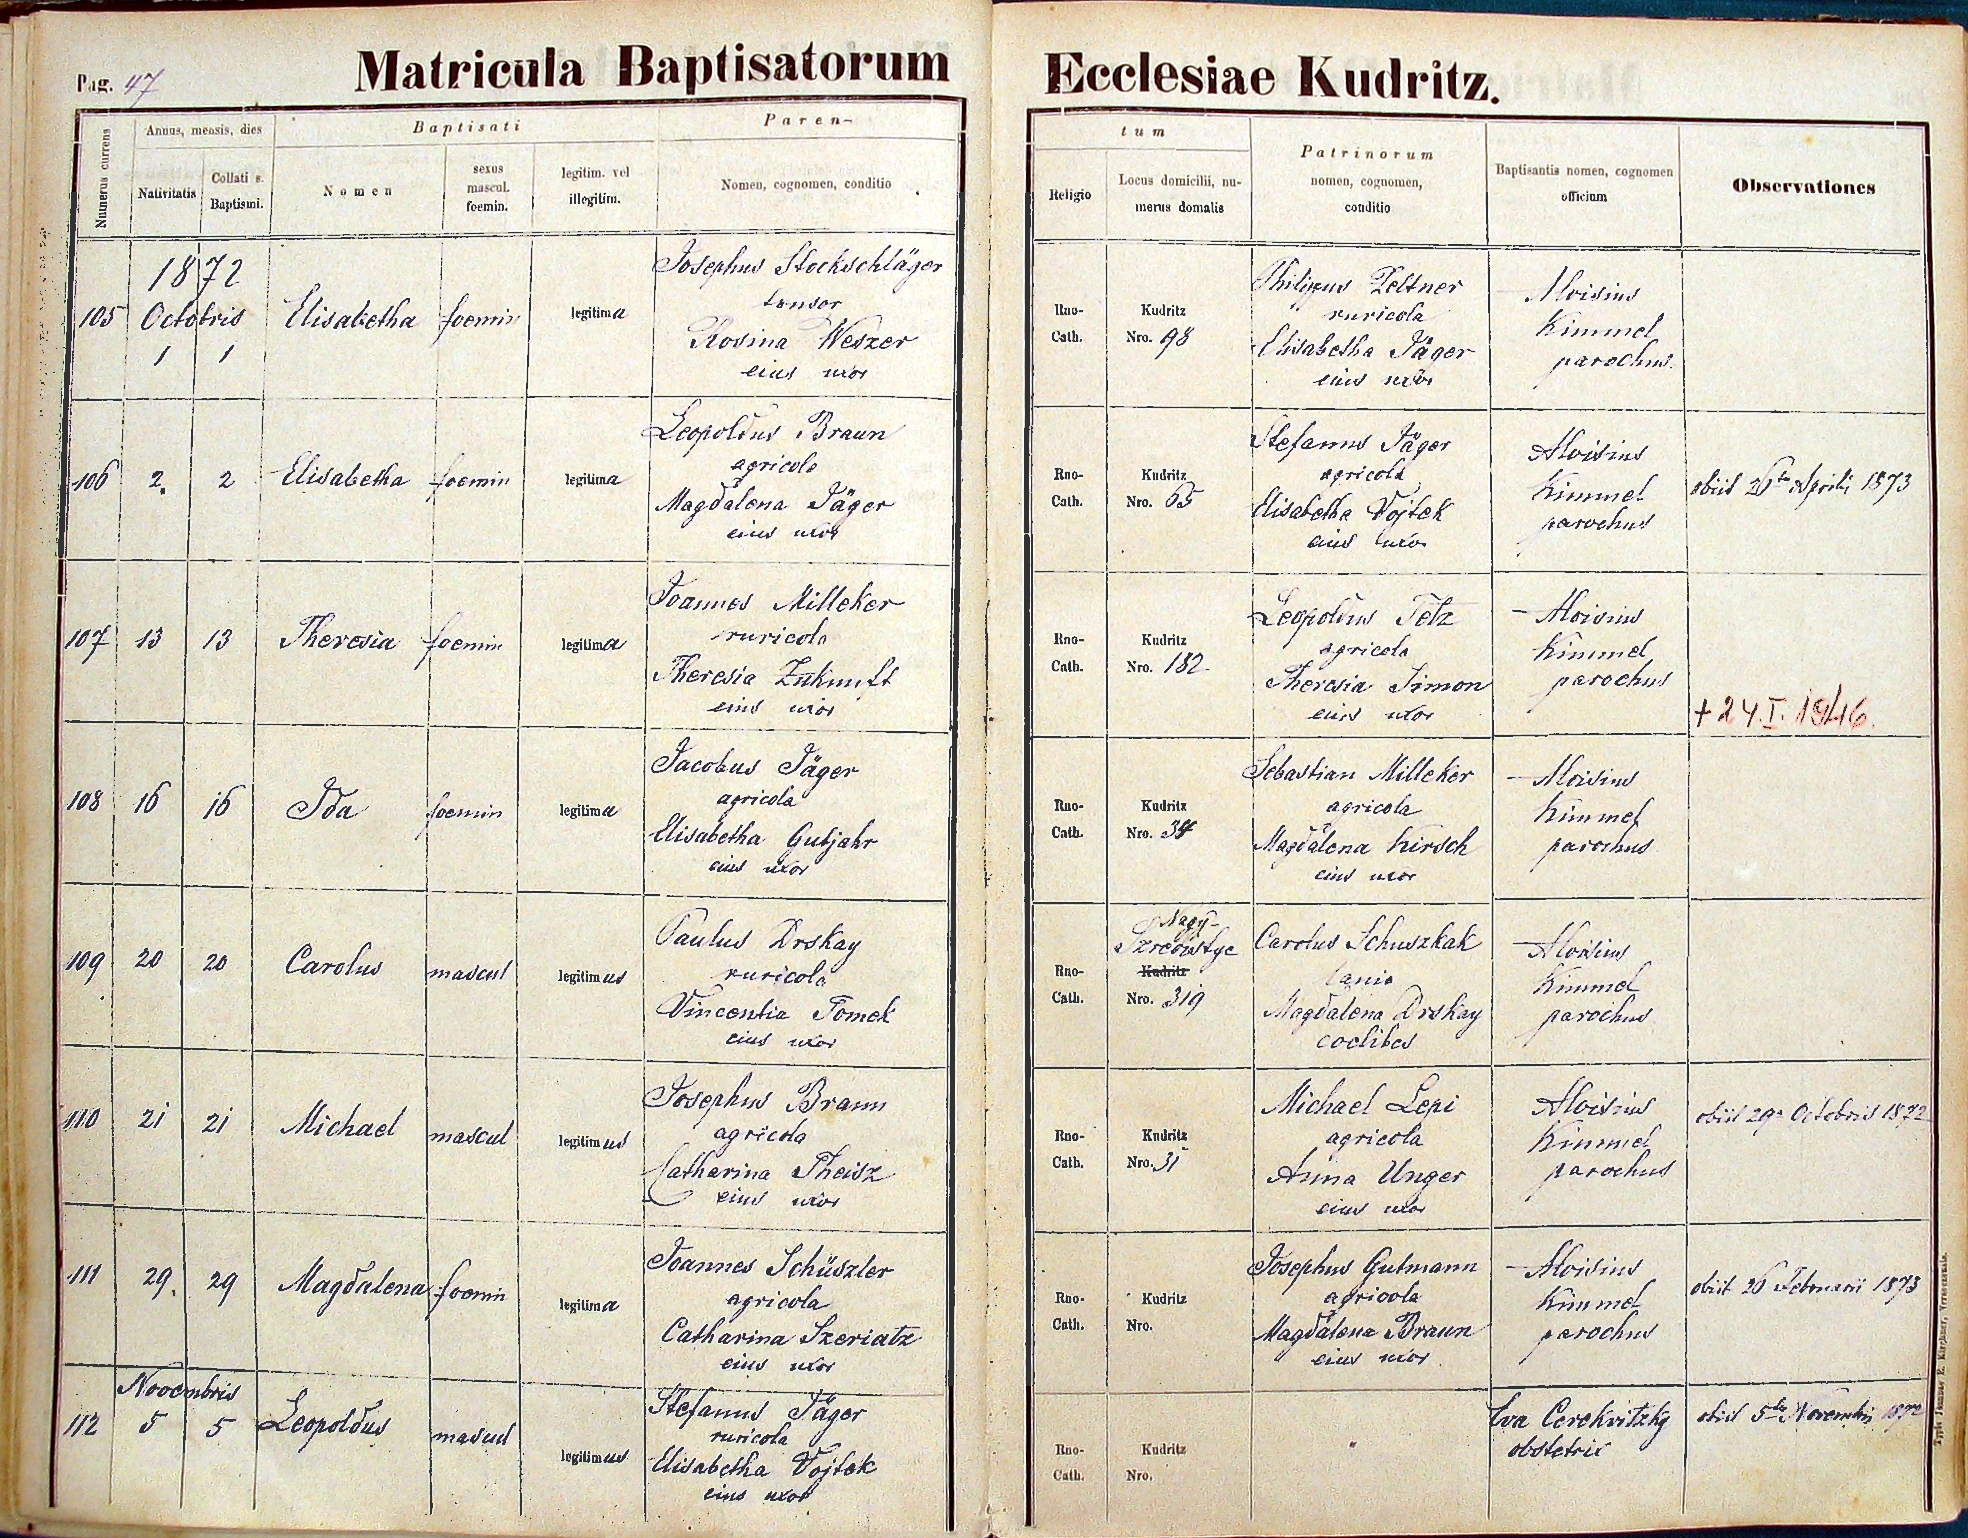 images/church_records/BIRTHS/1884-1899B/1886/047